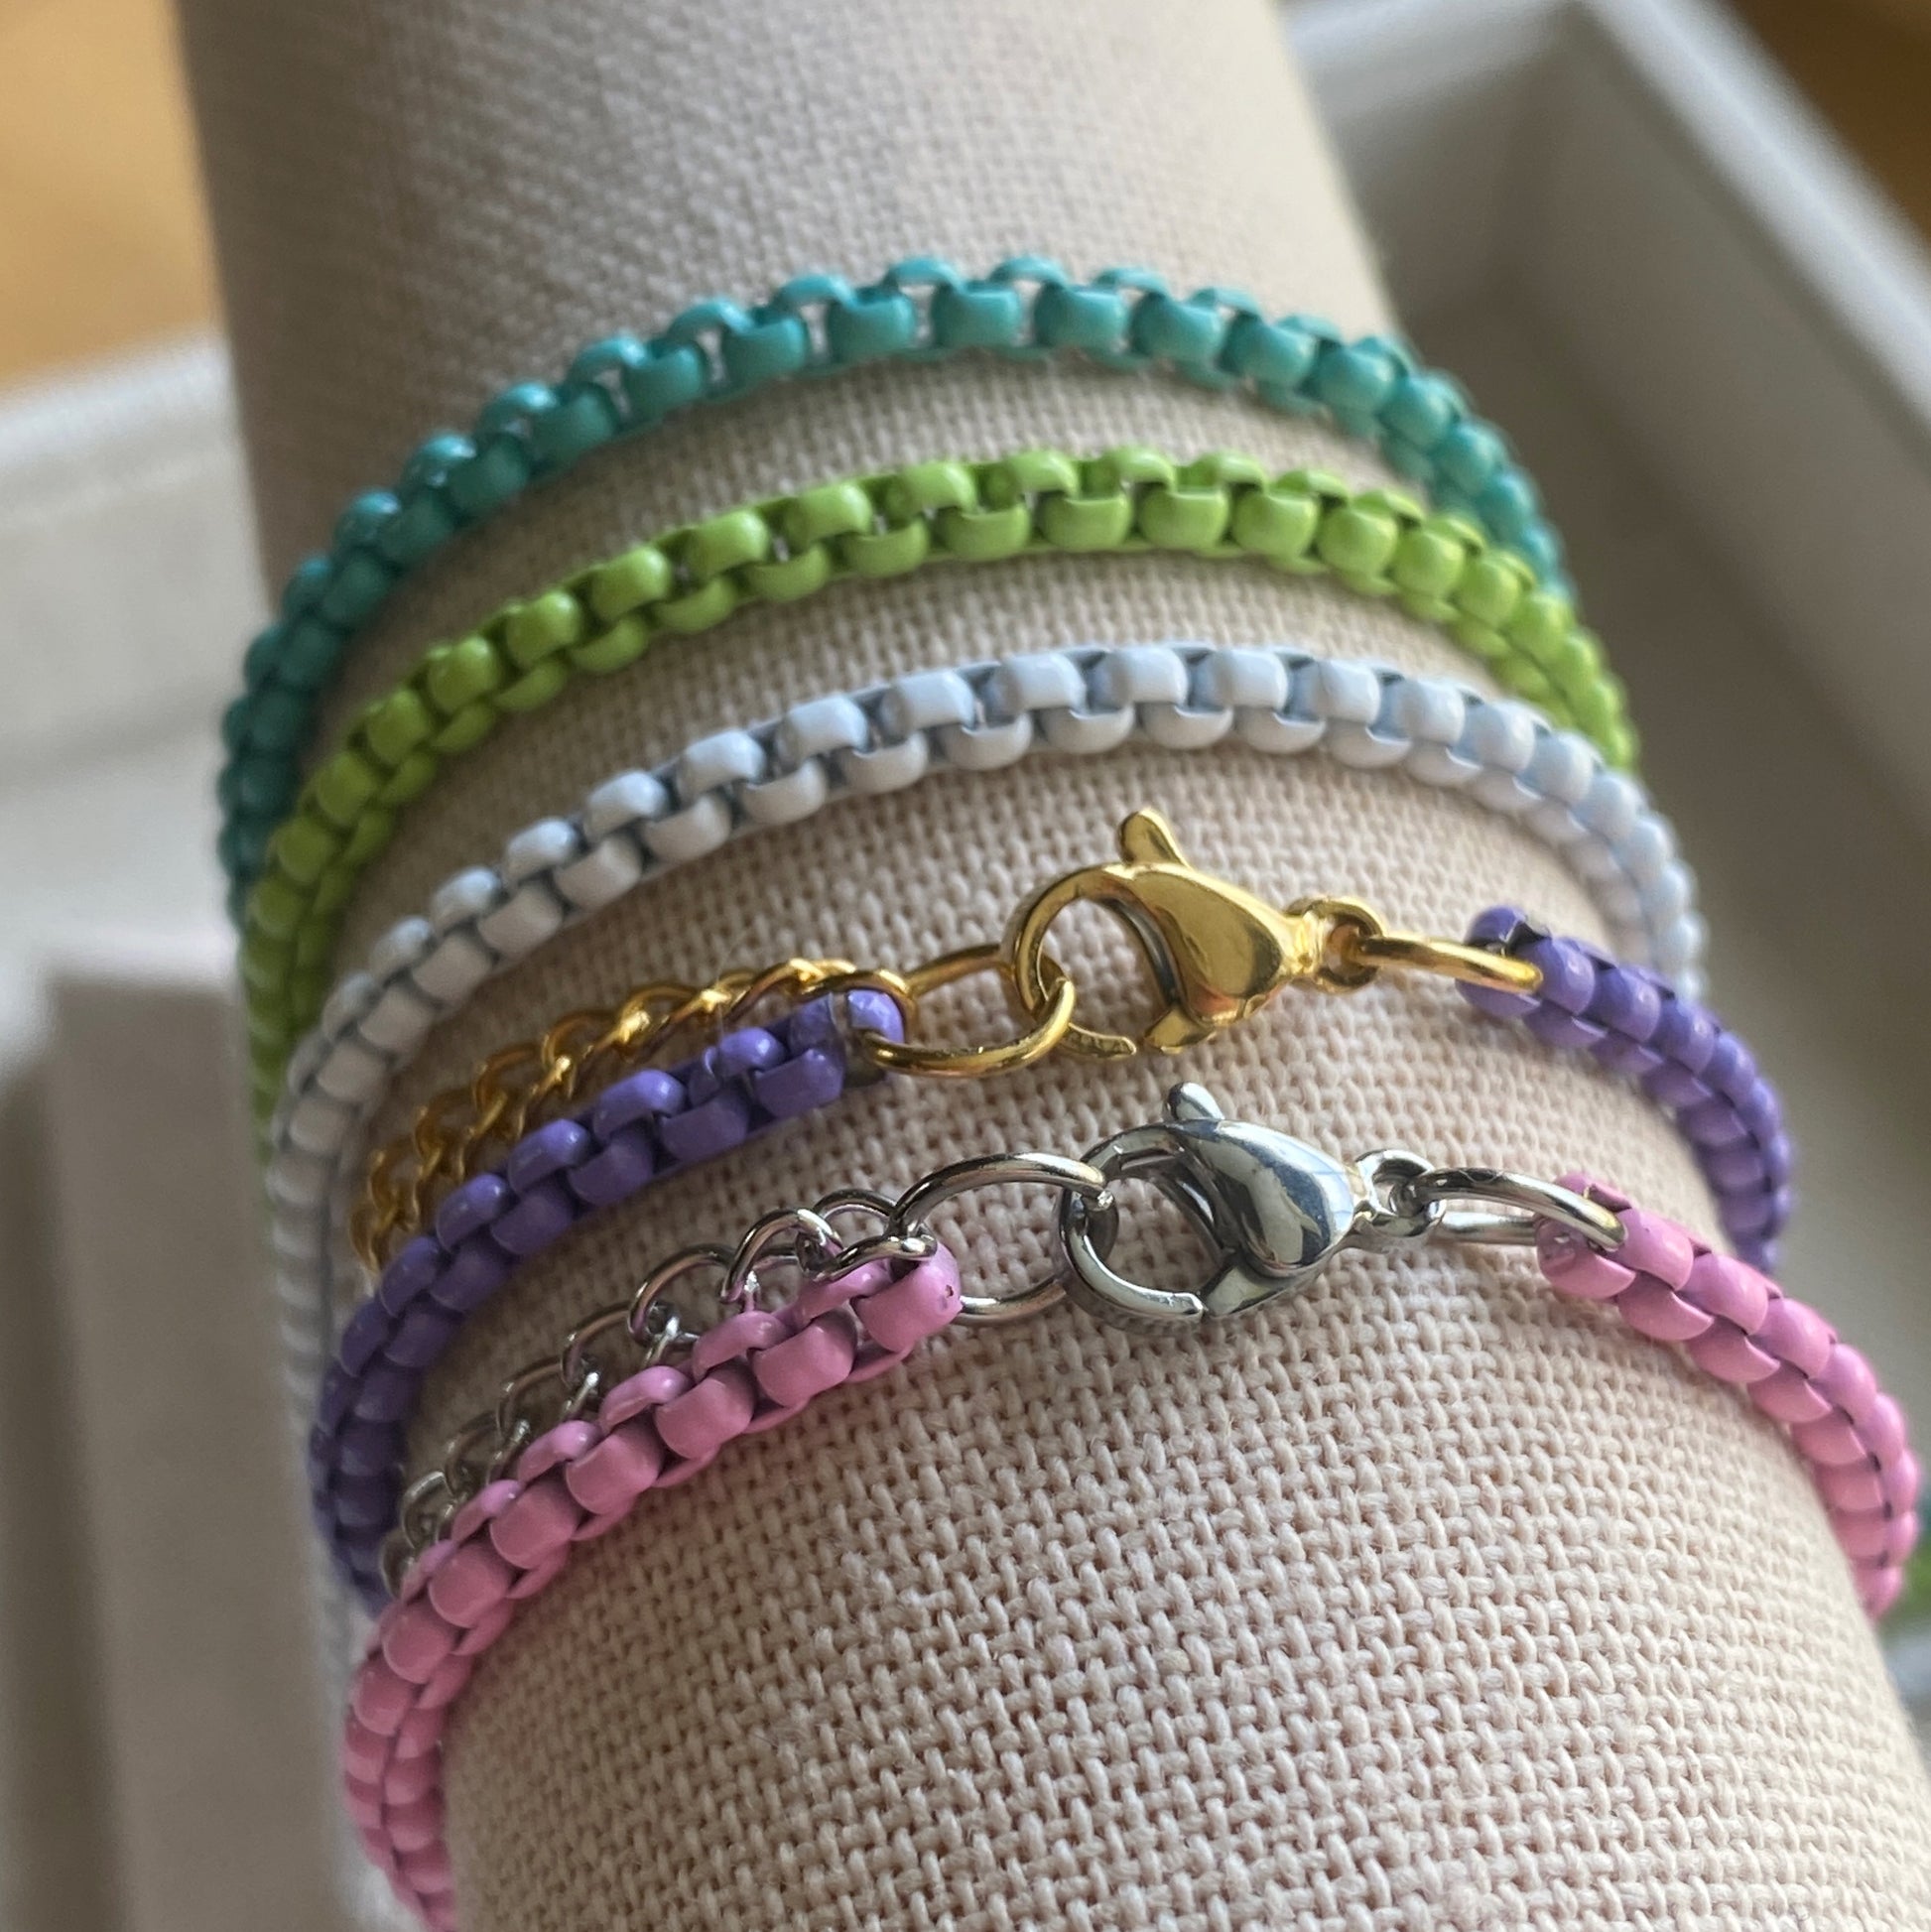 Enamel Box Chain Bracelet Colorful Fun Jewelry – River Valley Designs